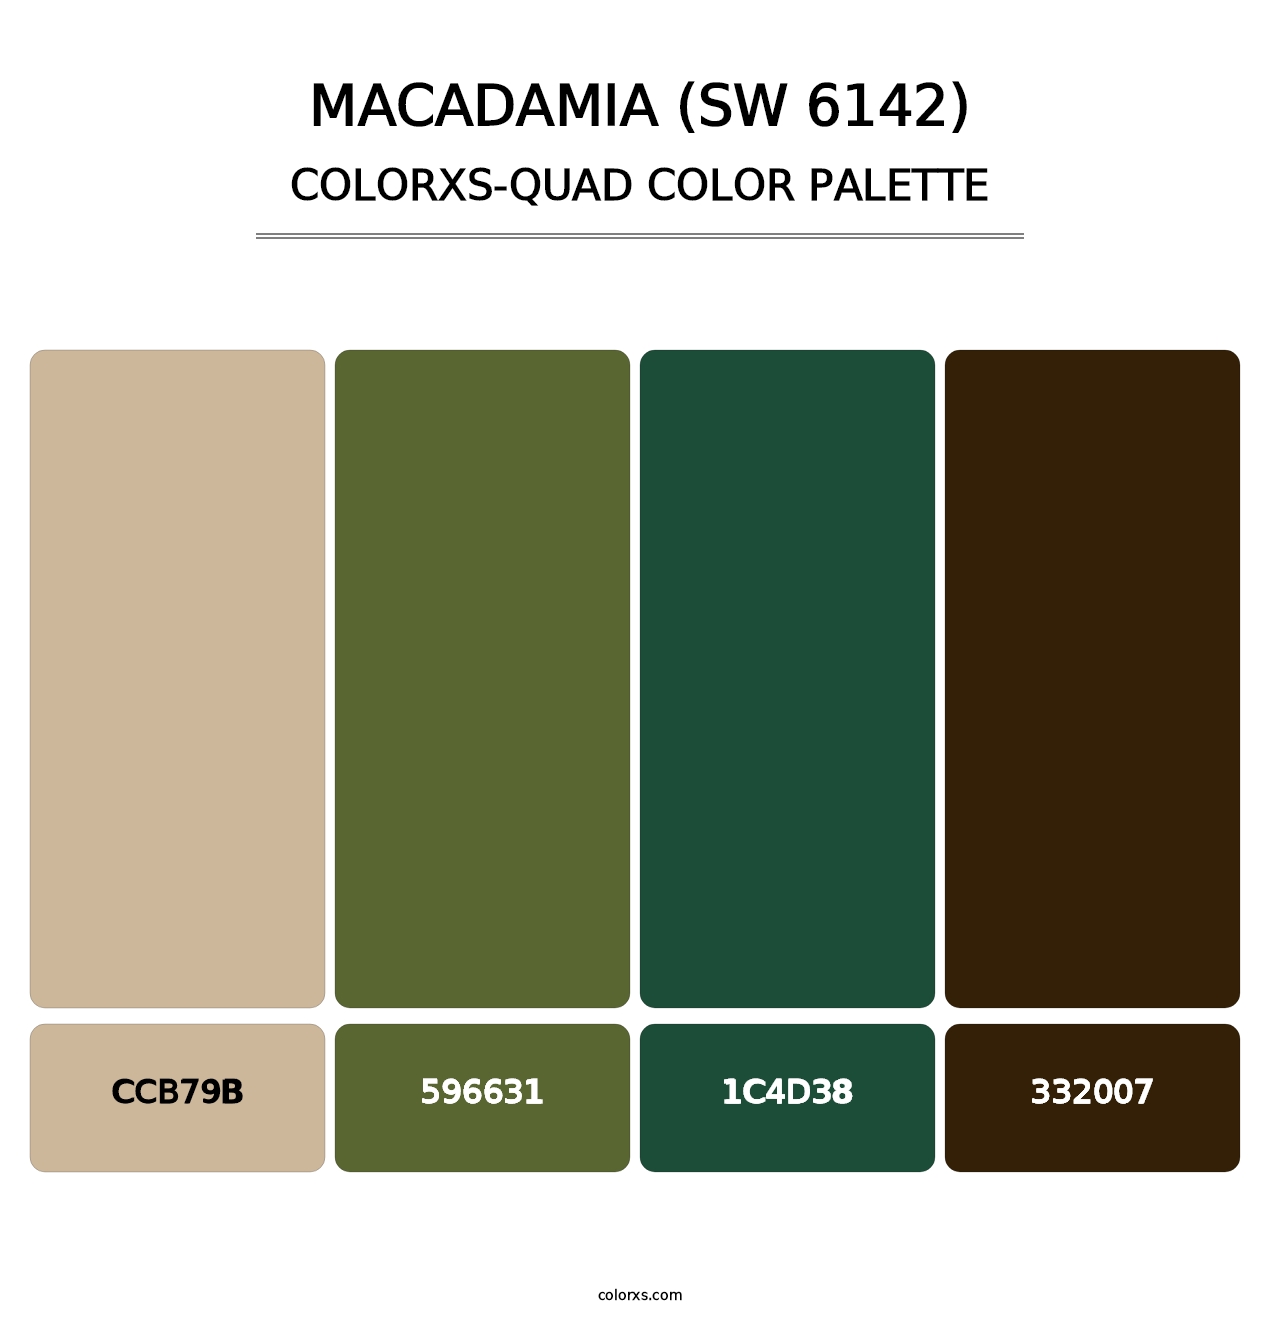 Macadamia (SW 6142) - Colorxs Quad Palette